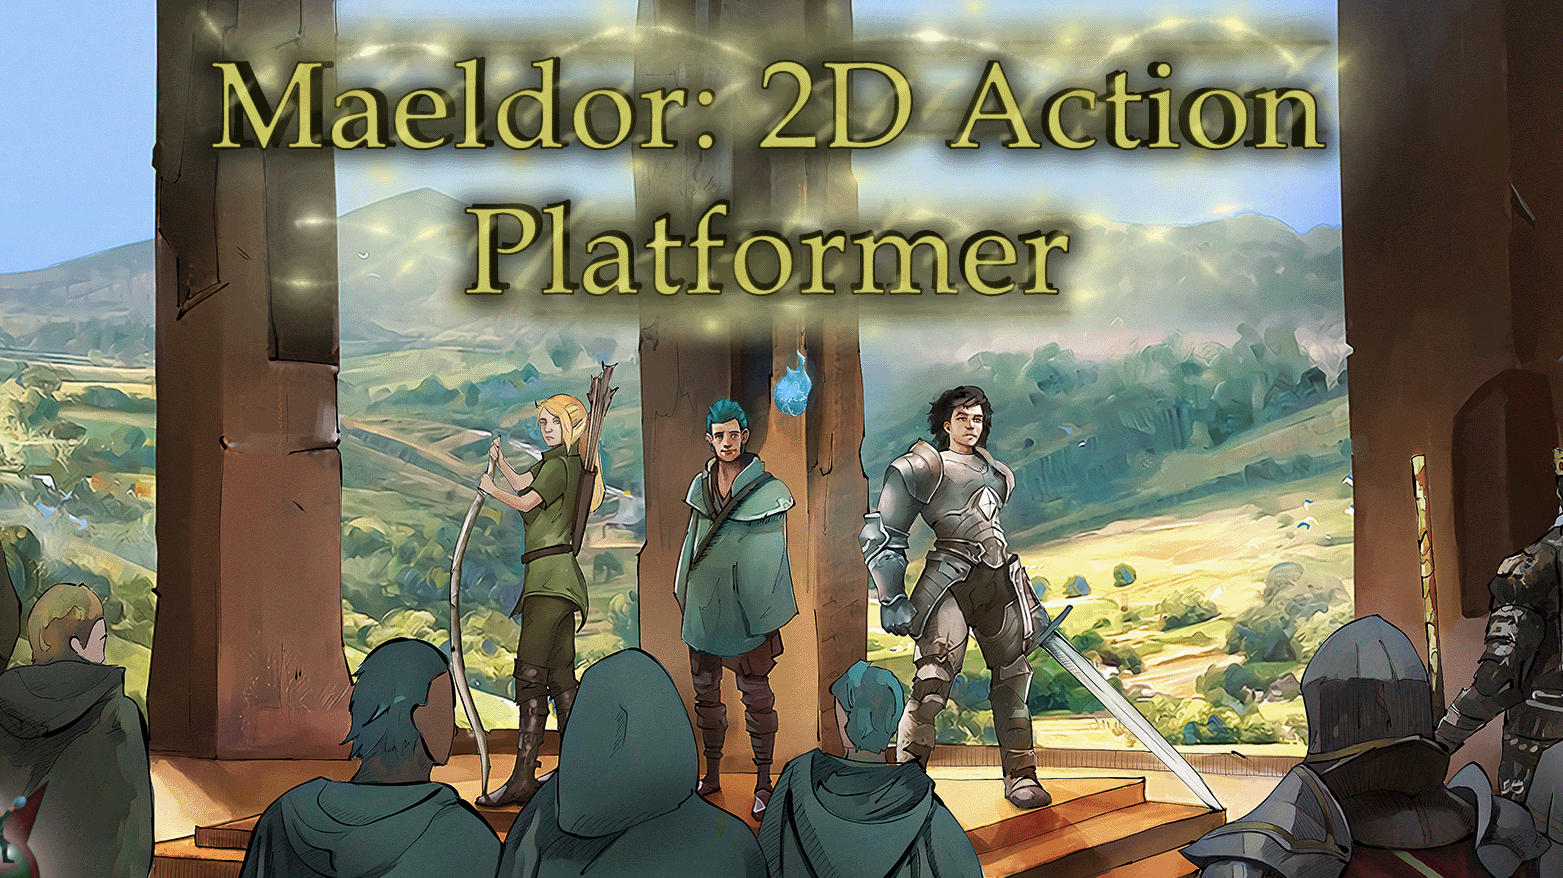 Maeldor: Action Platformer Game Image